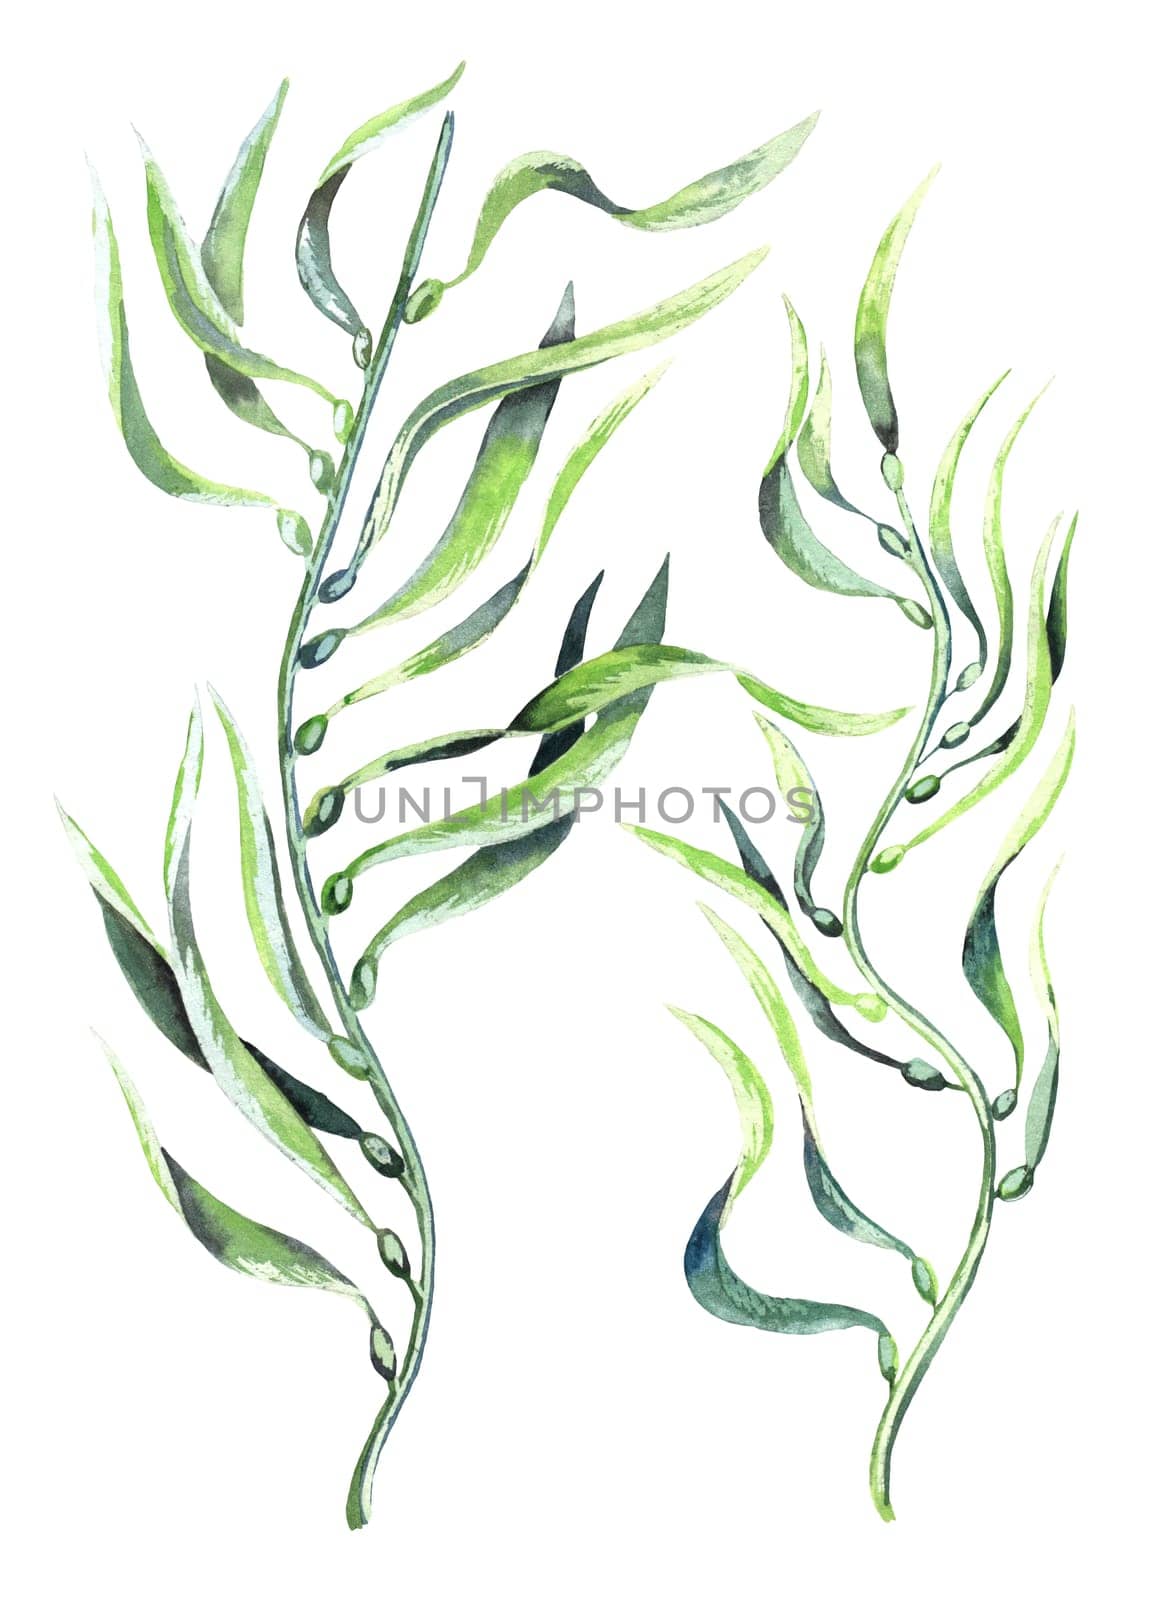 Seaweed kelp. Hand drawn plants watercolor illustration